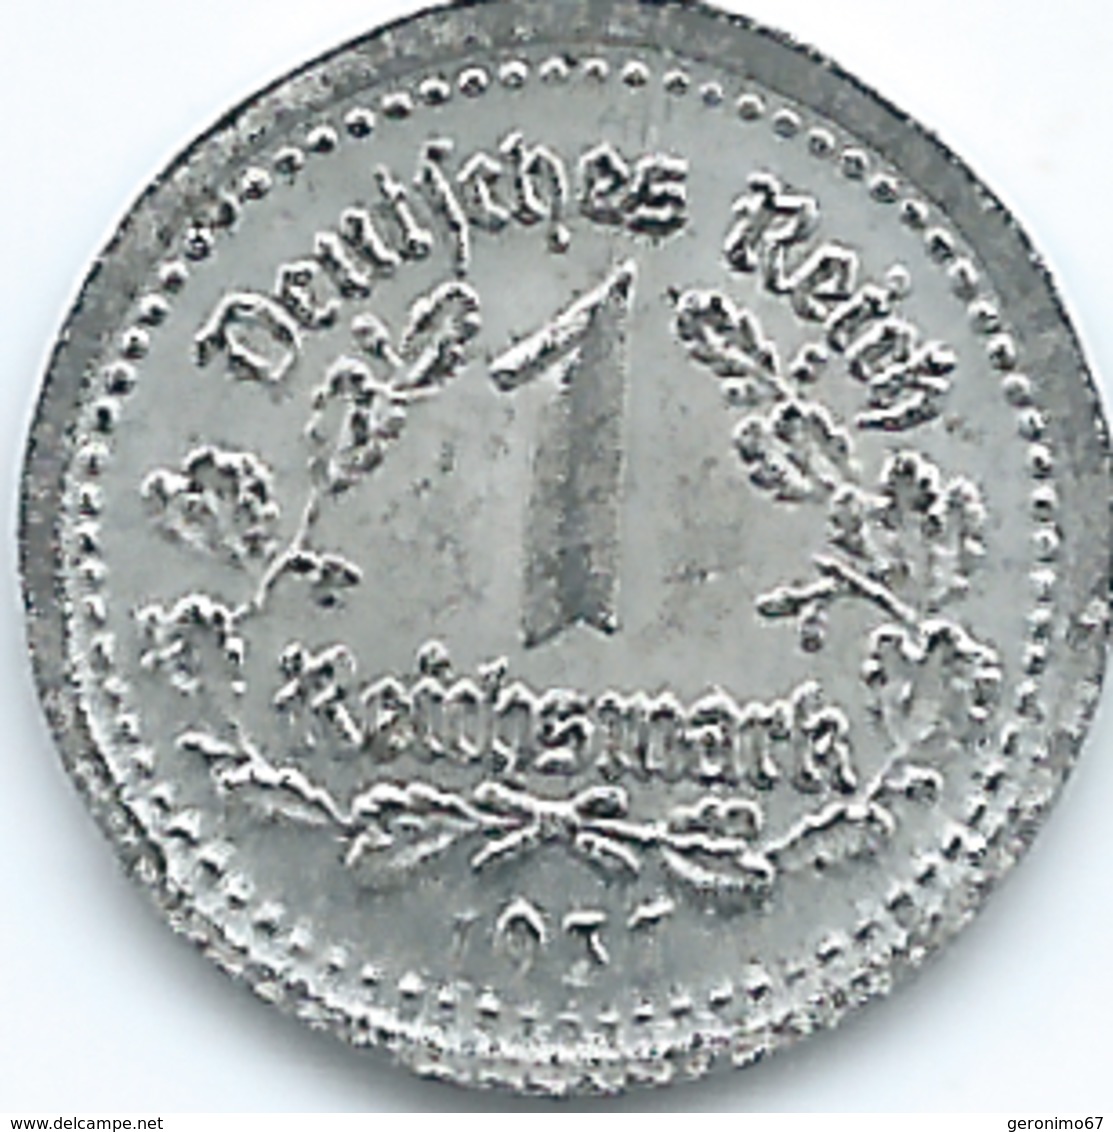 Germany - 1 Reichsmark - 1937 - Tiny Tin Coin - 1 Reichsmark